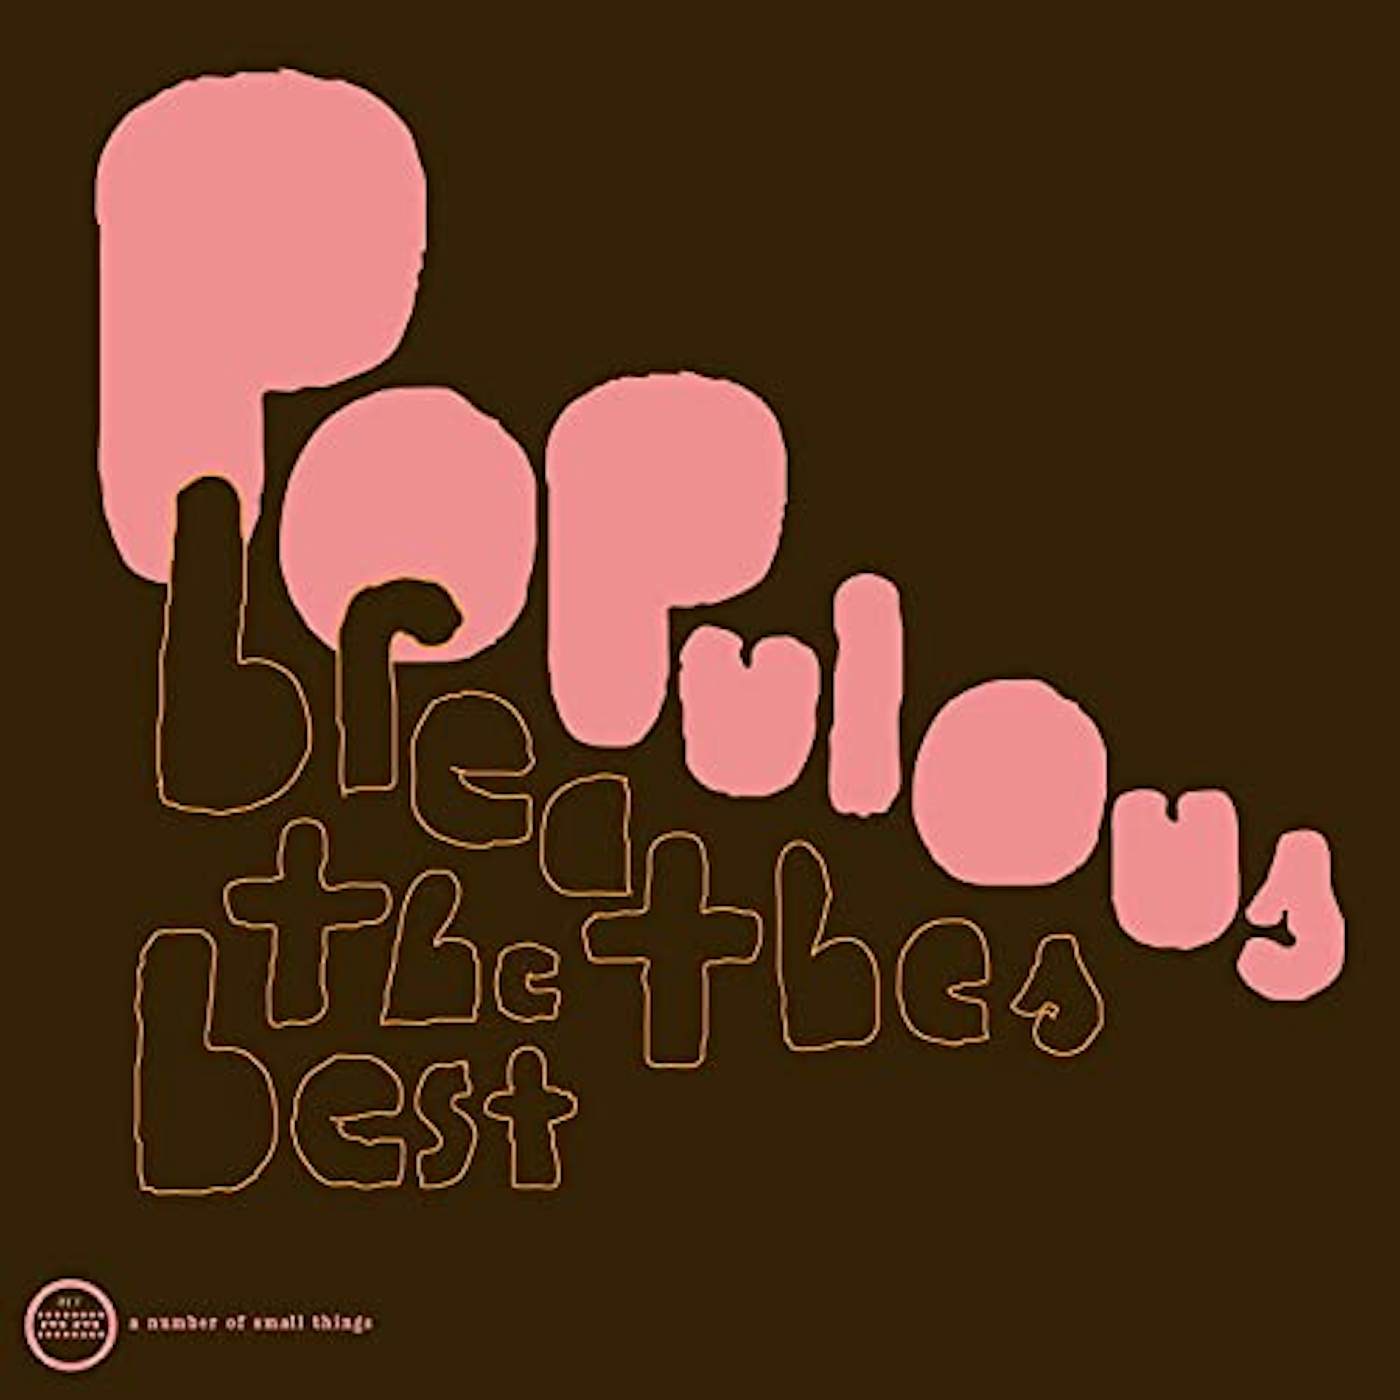 Populous Breathes The Best Vinyl Record